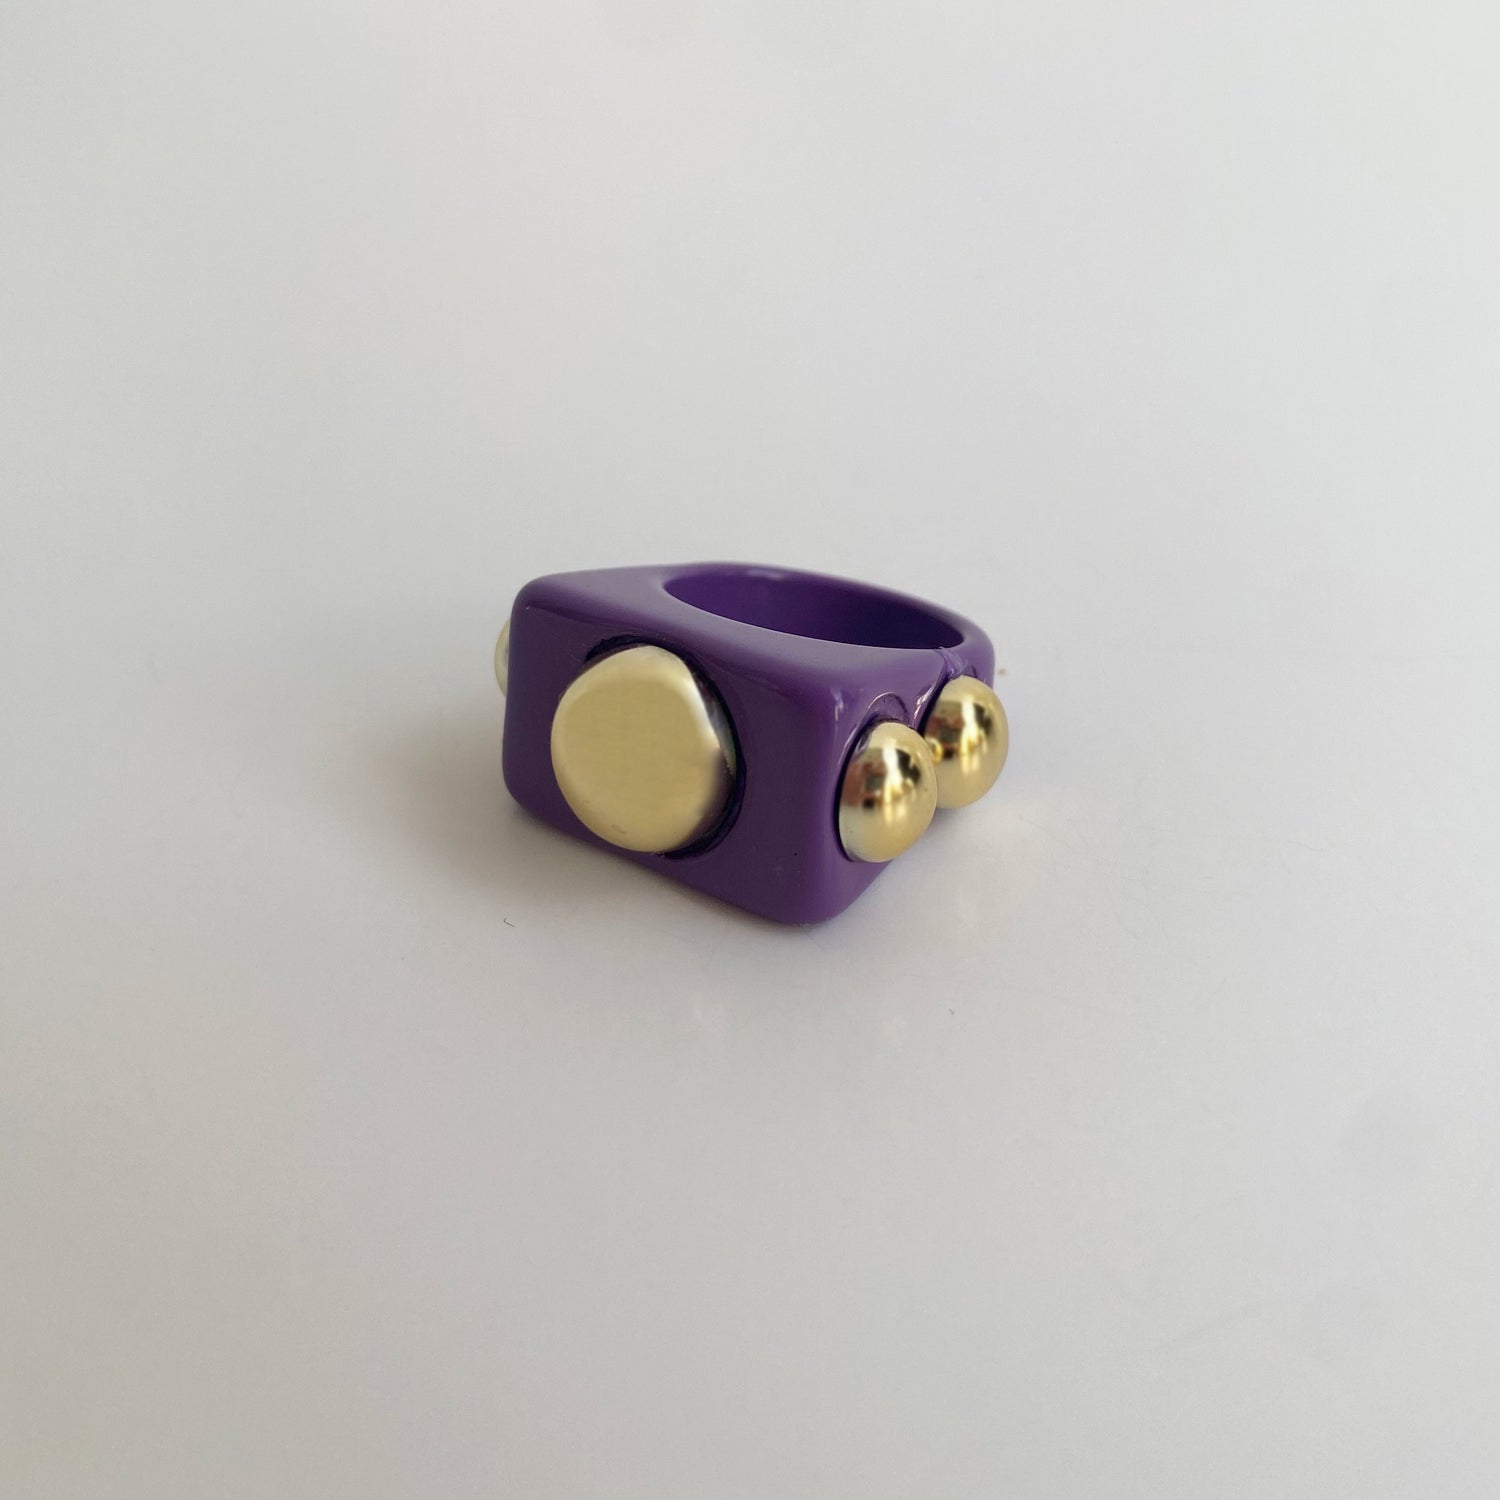 acrylic stud ring in purple